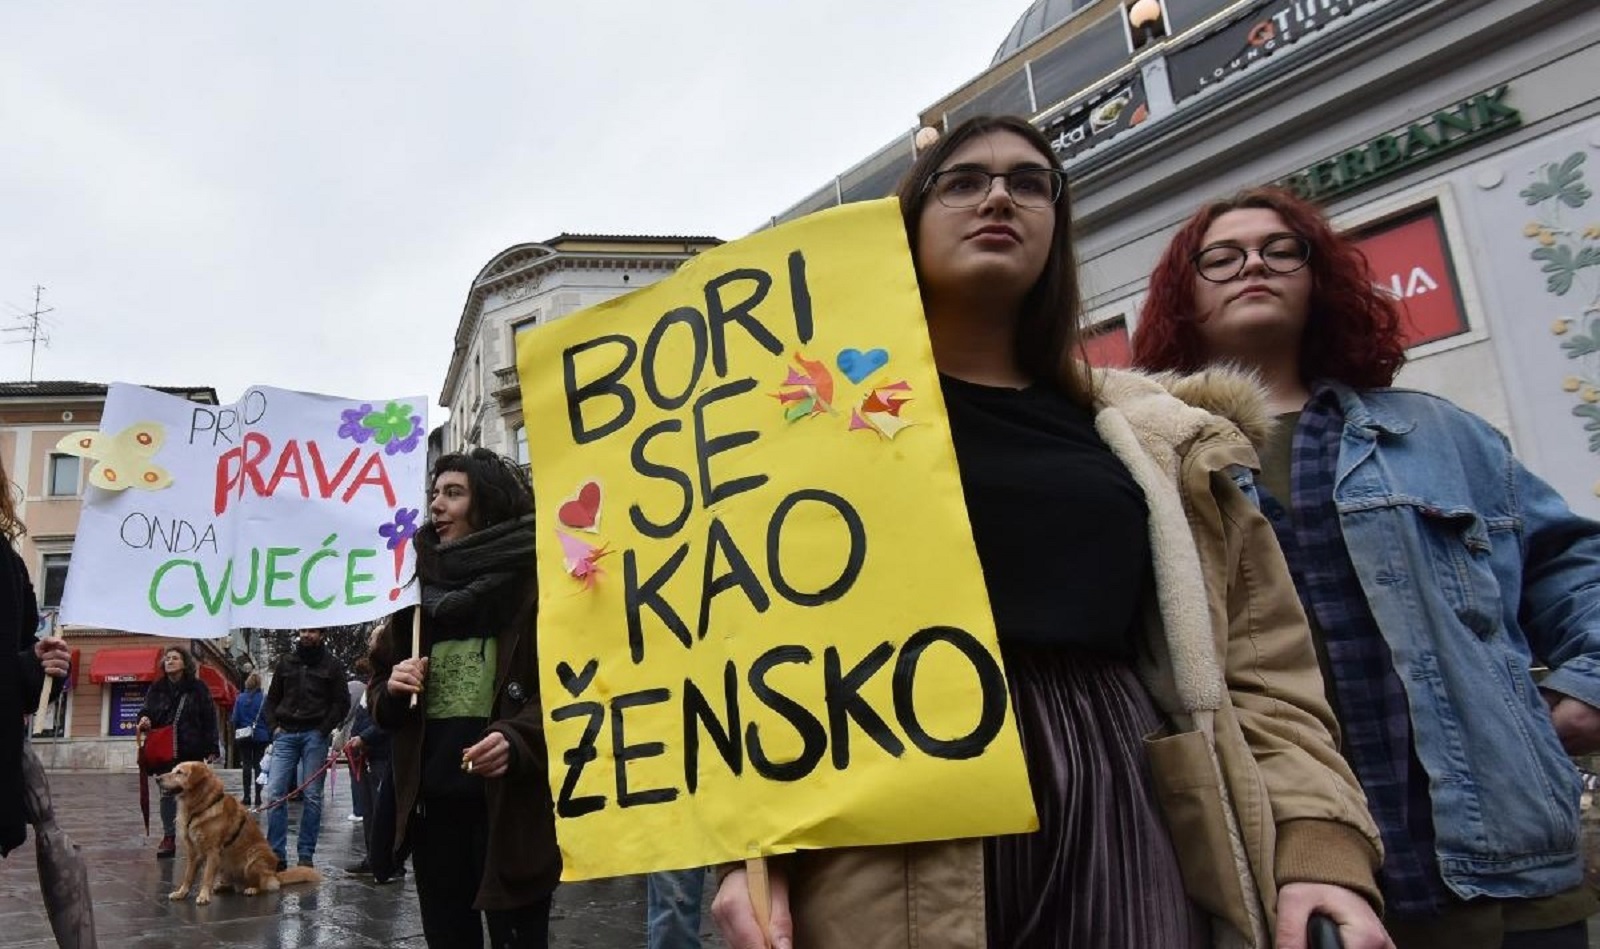 07.03.2020., Pula - Udruga PANK organizirala javno okupljanje na Portarati pod sloganom Mars za zenska prava.

Photo: Dusko Marusic/PIXSELL